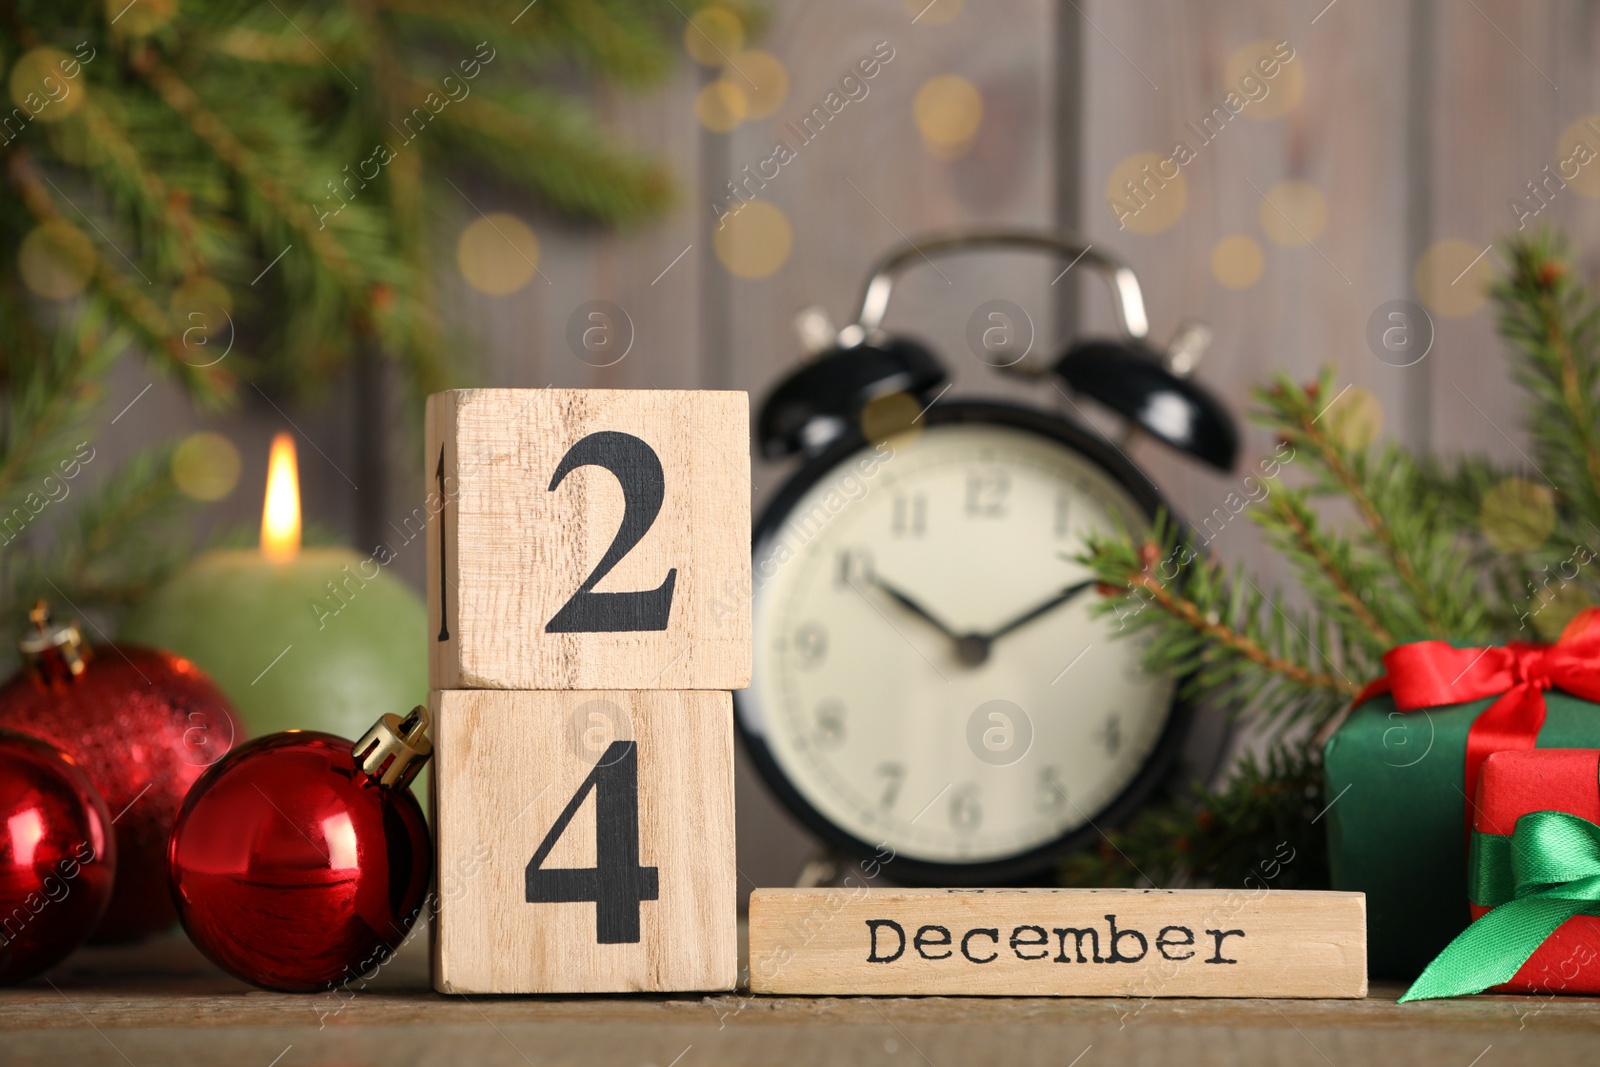 Photo of December 24 - Christmas Eve. Wooden block calendar, alarm clock and festive decor on table against blurred lights